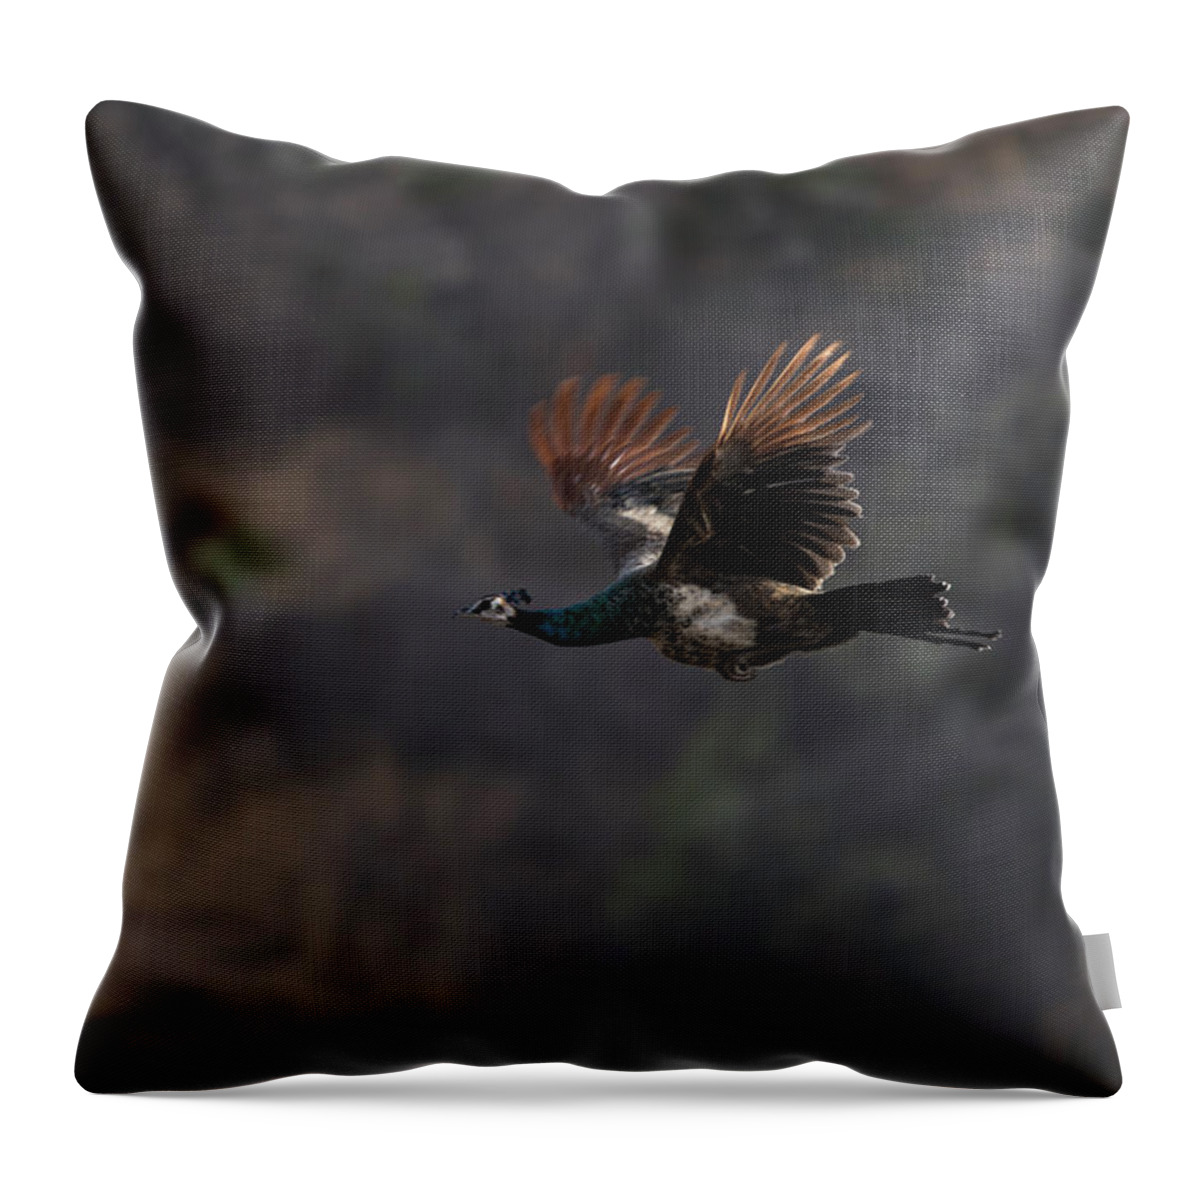 Flight Throw Pillow featuring the photograph Peacock in Flight by Ramabhadran Thirupattur